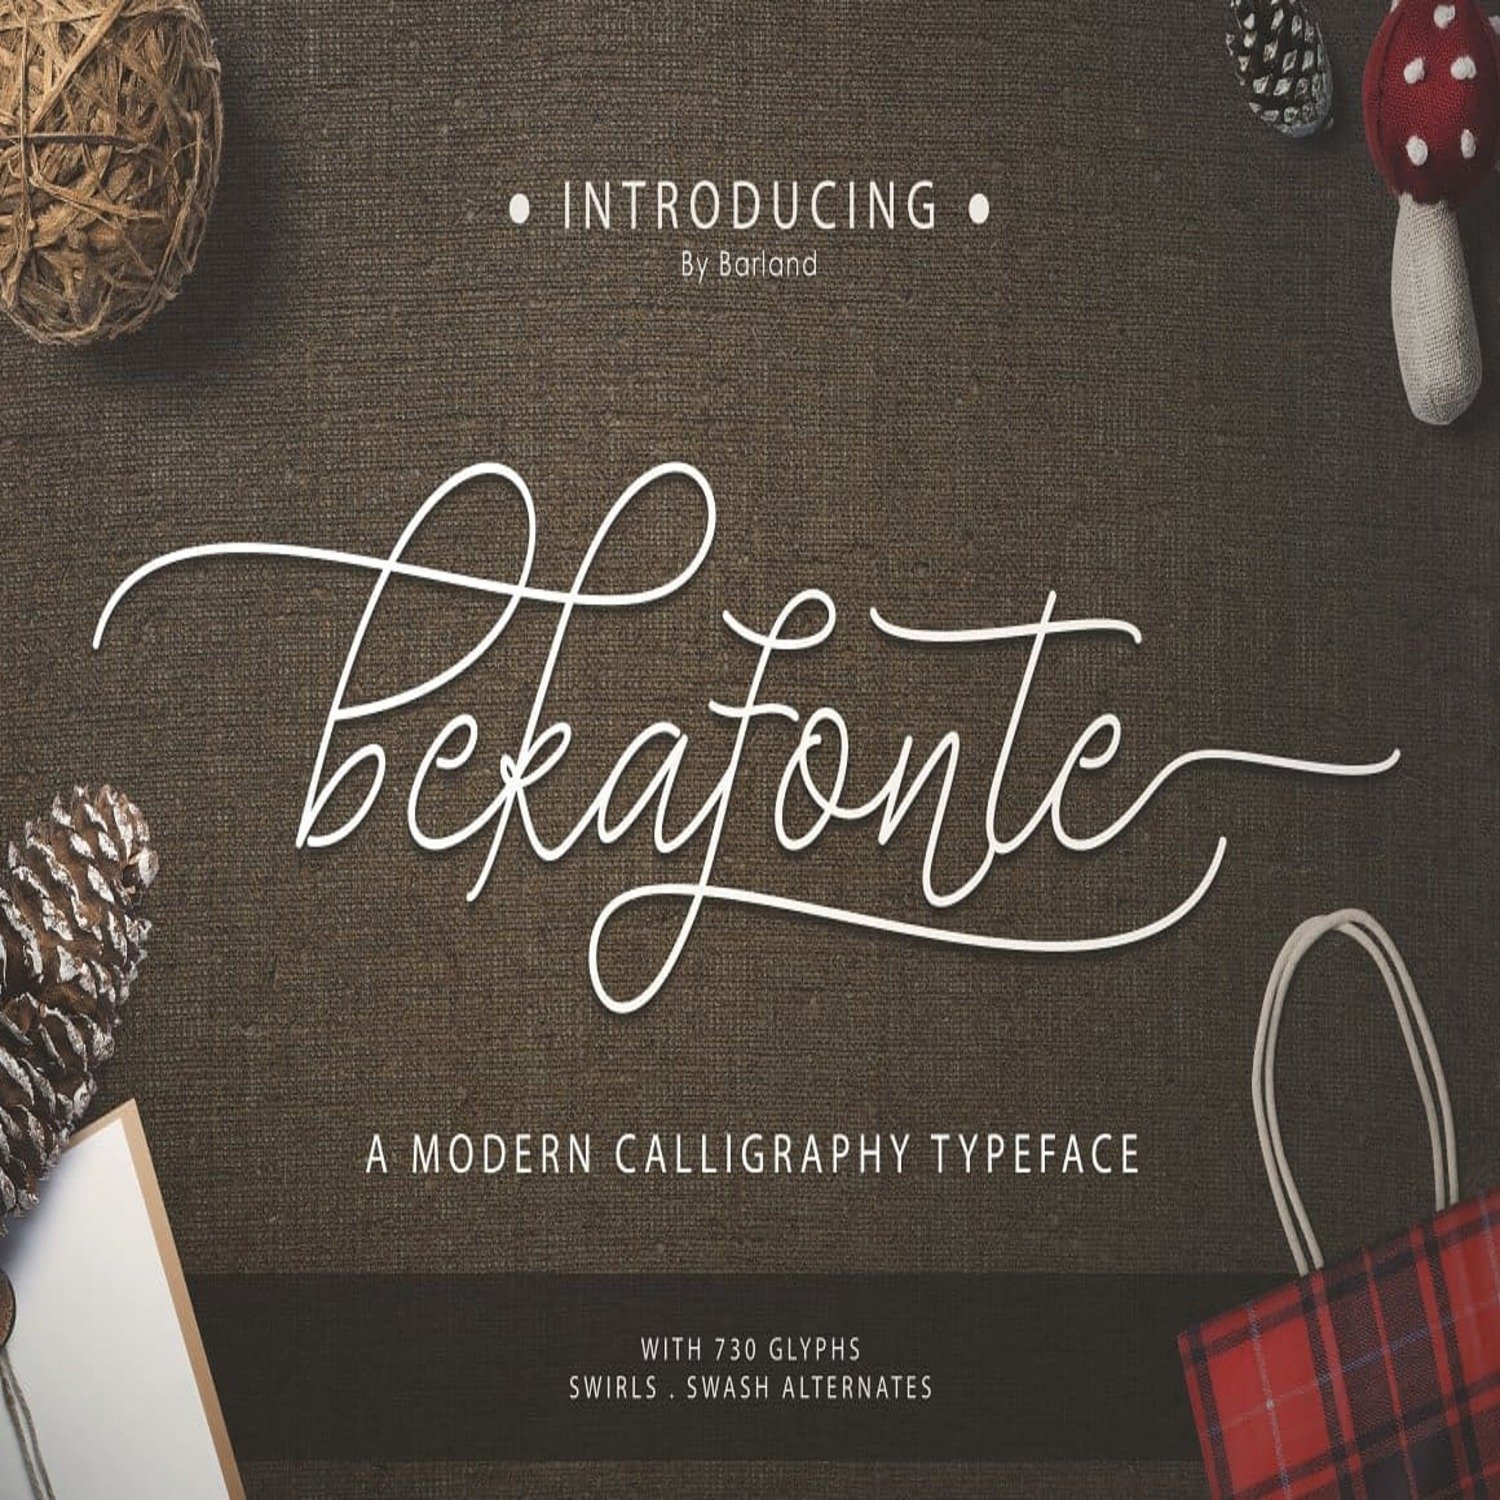 Bekafonte Typeface main cover.